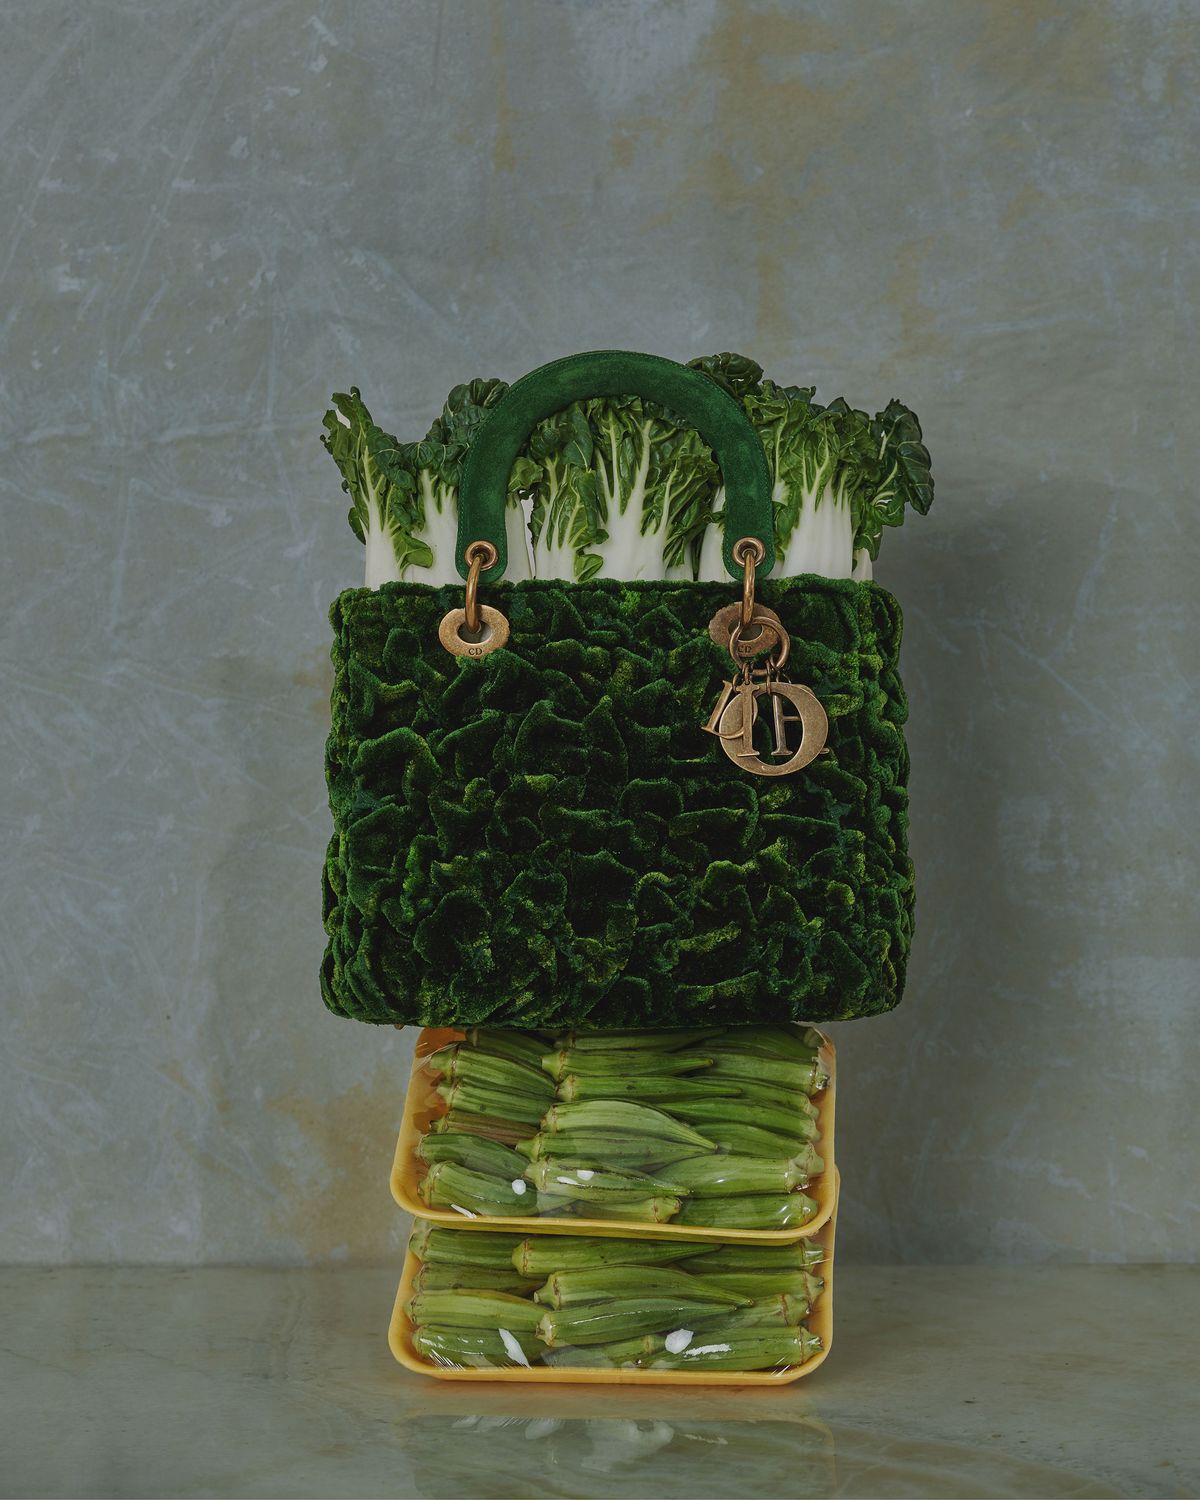 Dior Lady Art Bag by Korean Artist Lee Bul